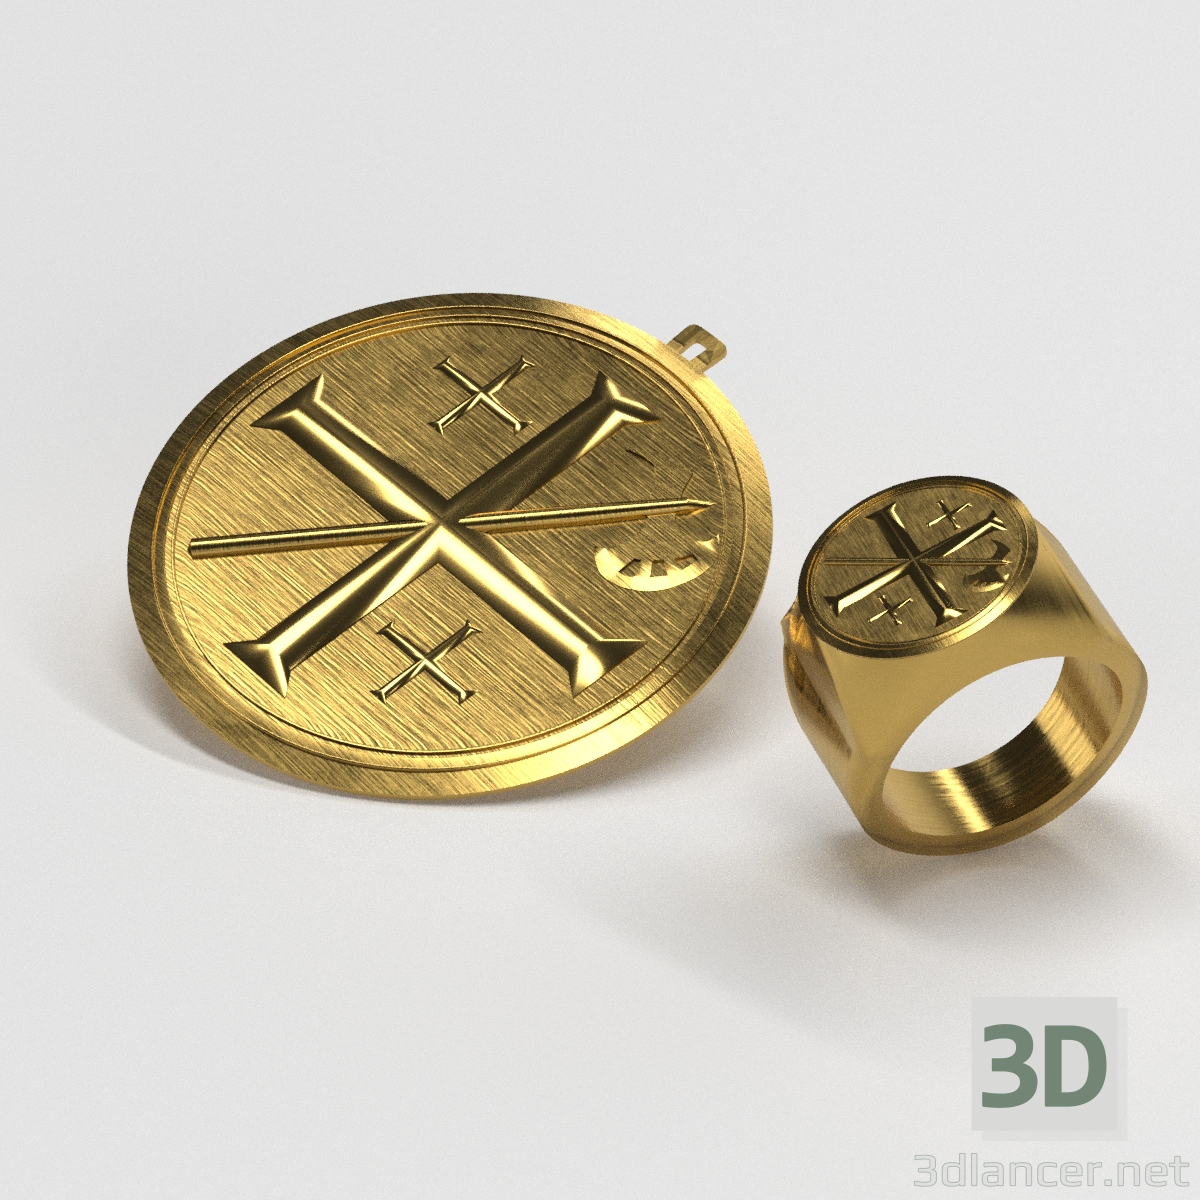 Ring und Medaillon 3D-Modell kaufen - Rendern